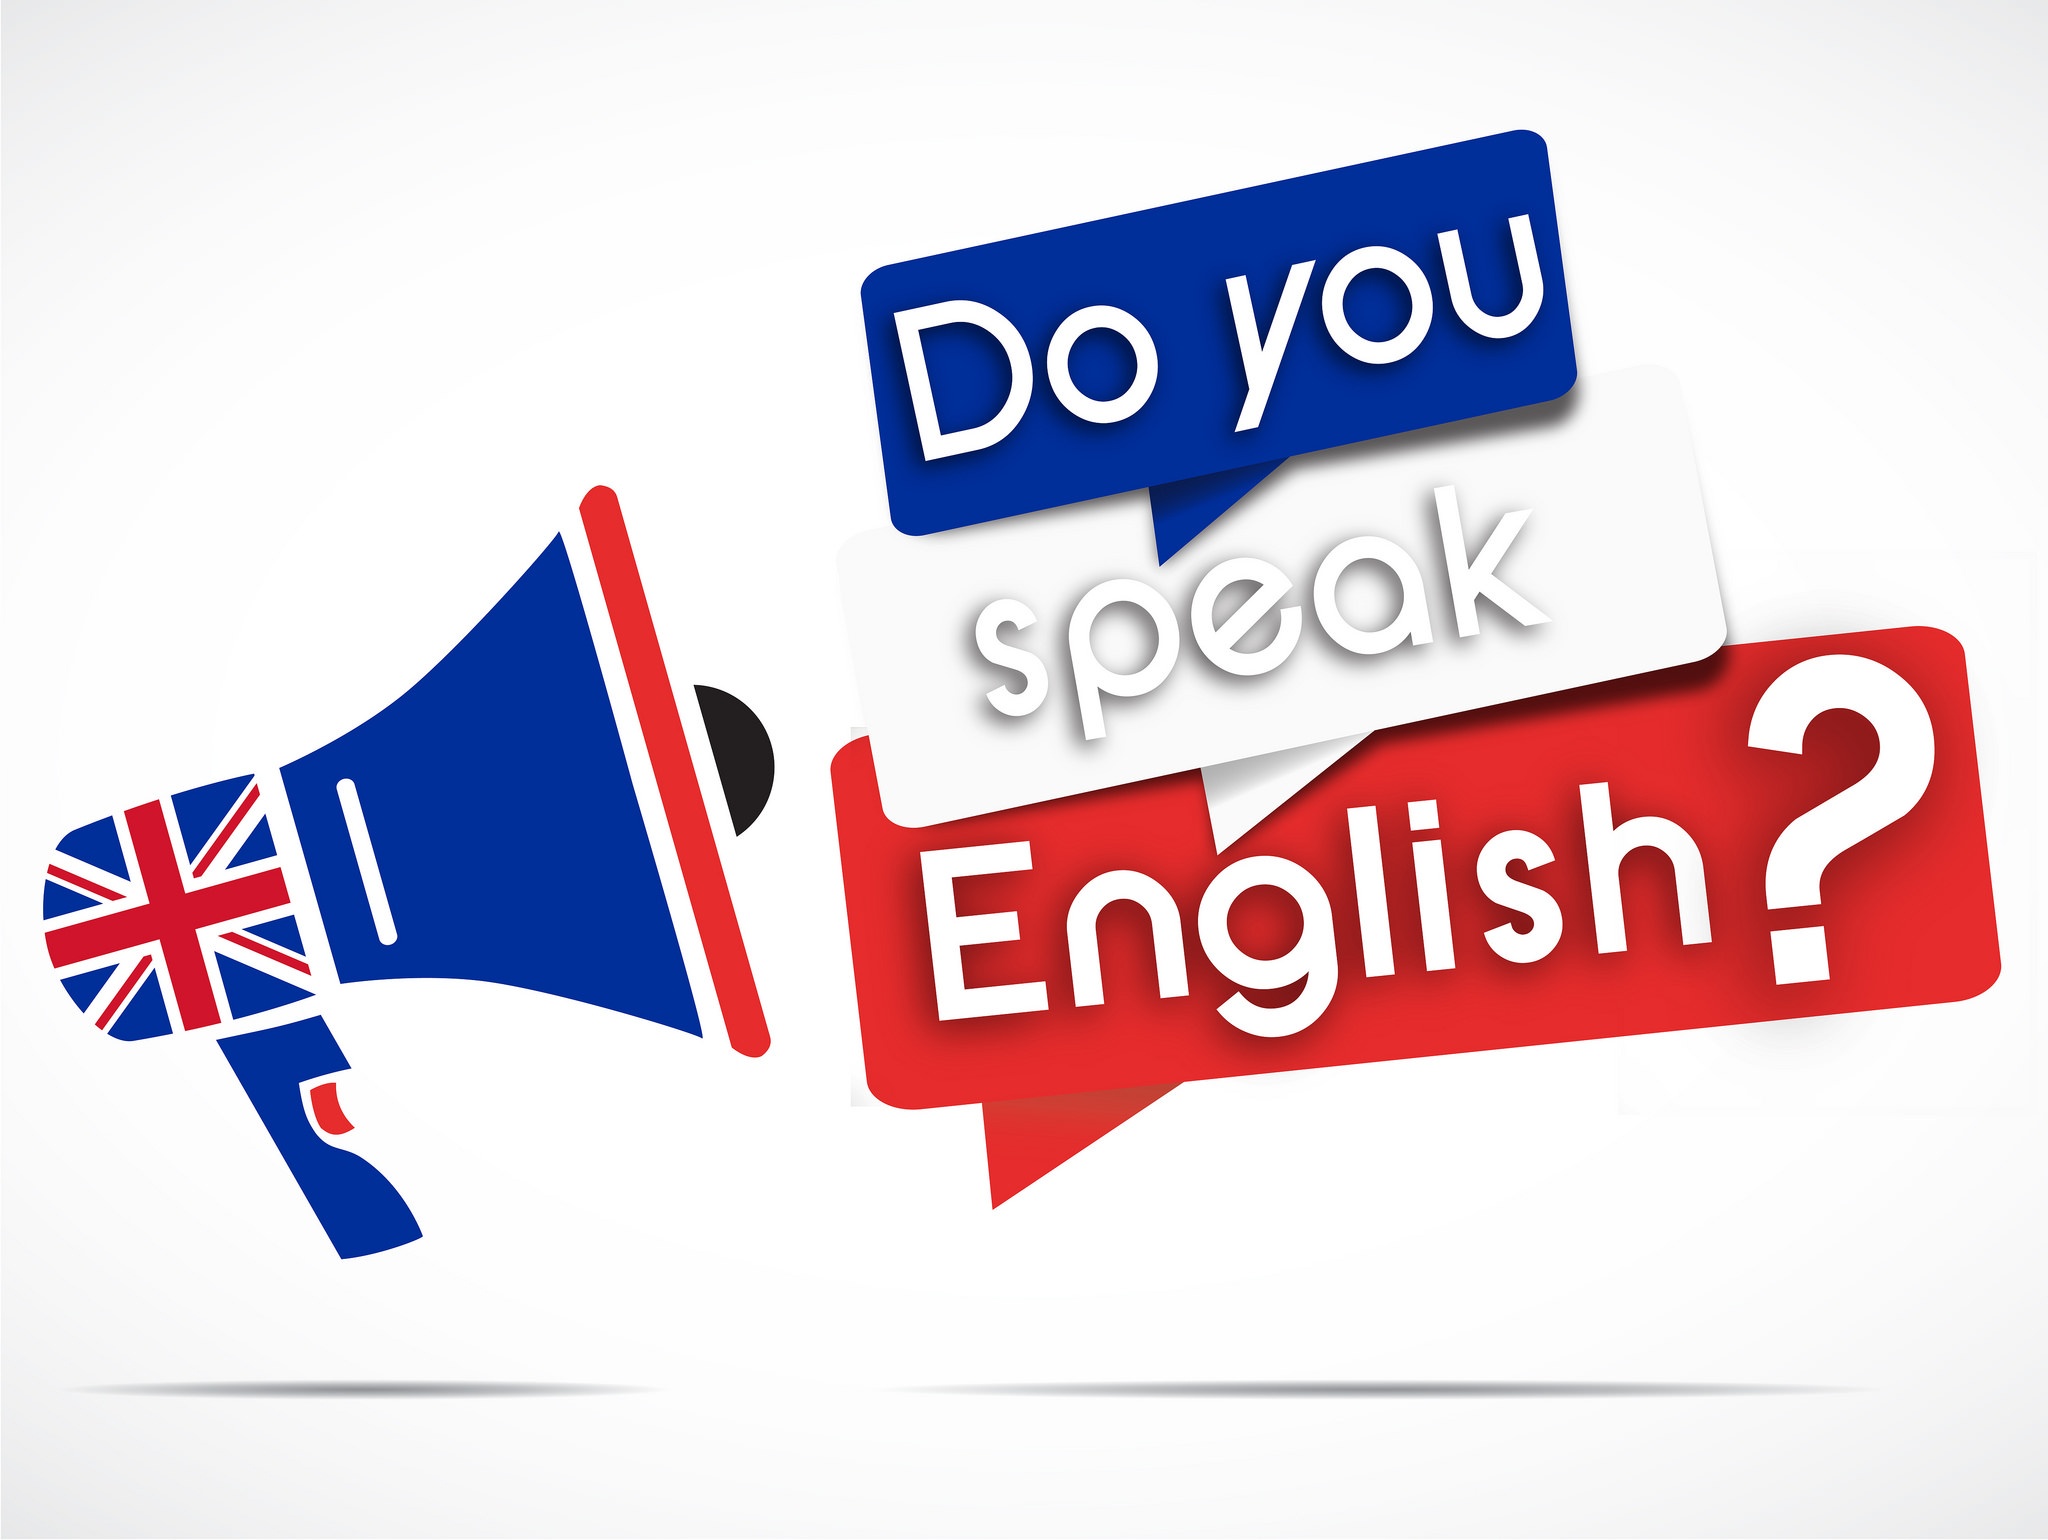 Do you speak english with me. Speak English картинка. Do you speak English. Speak English надпись. Английский язык do you speak.